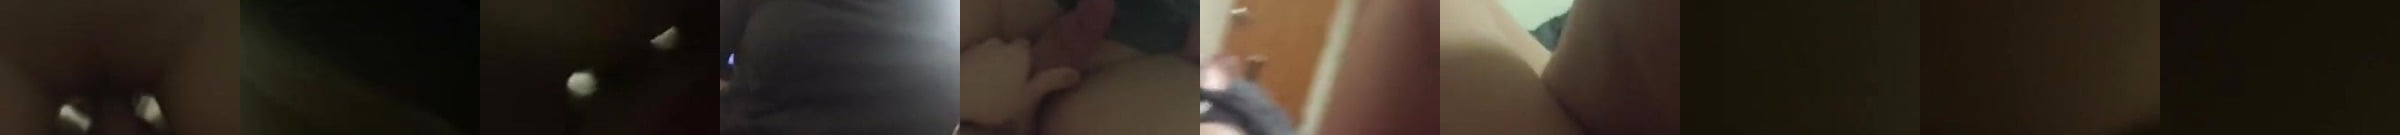 College Dorm Girls Porn Videos Xhamster